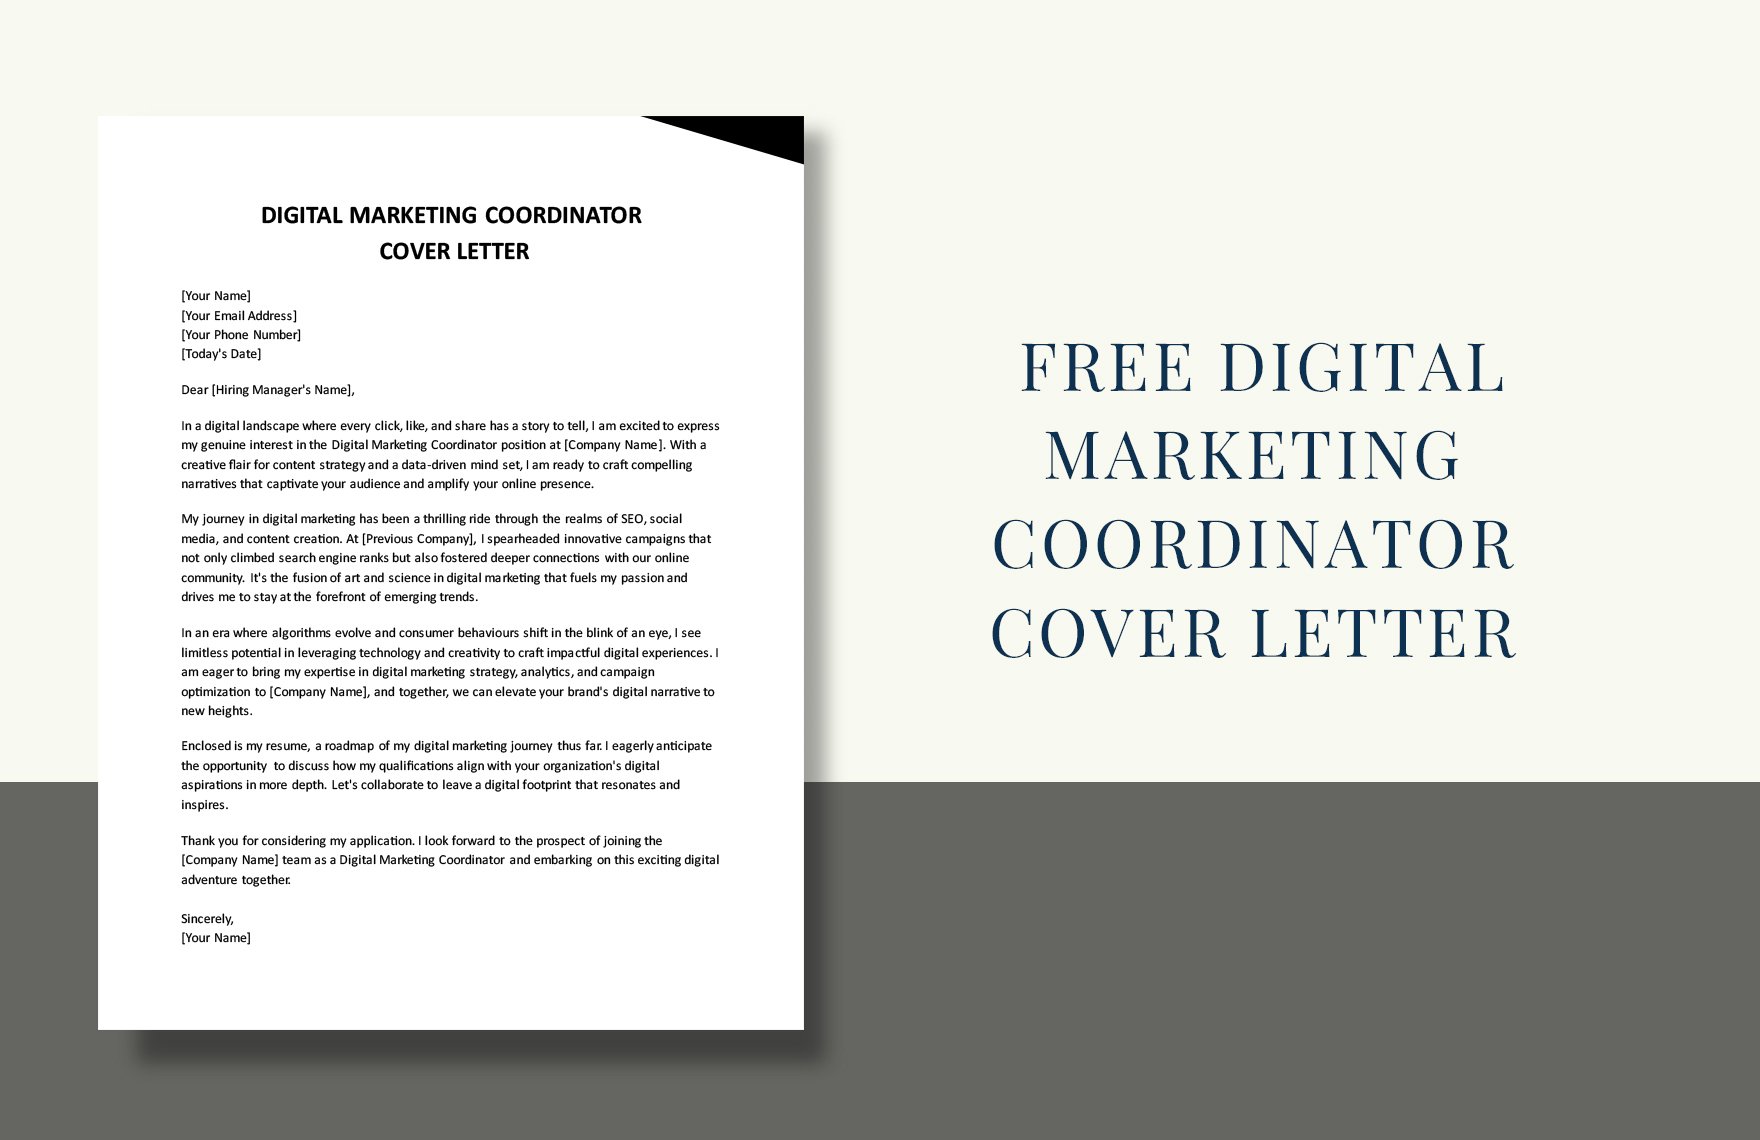 Digital Marketing Coordinator Cover Letter in Word, Google Docs, PDF